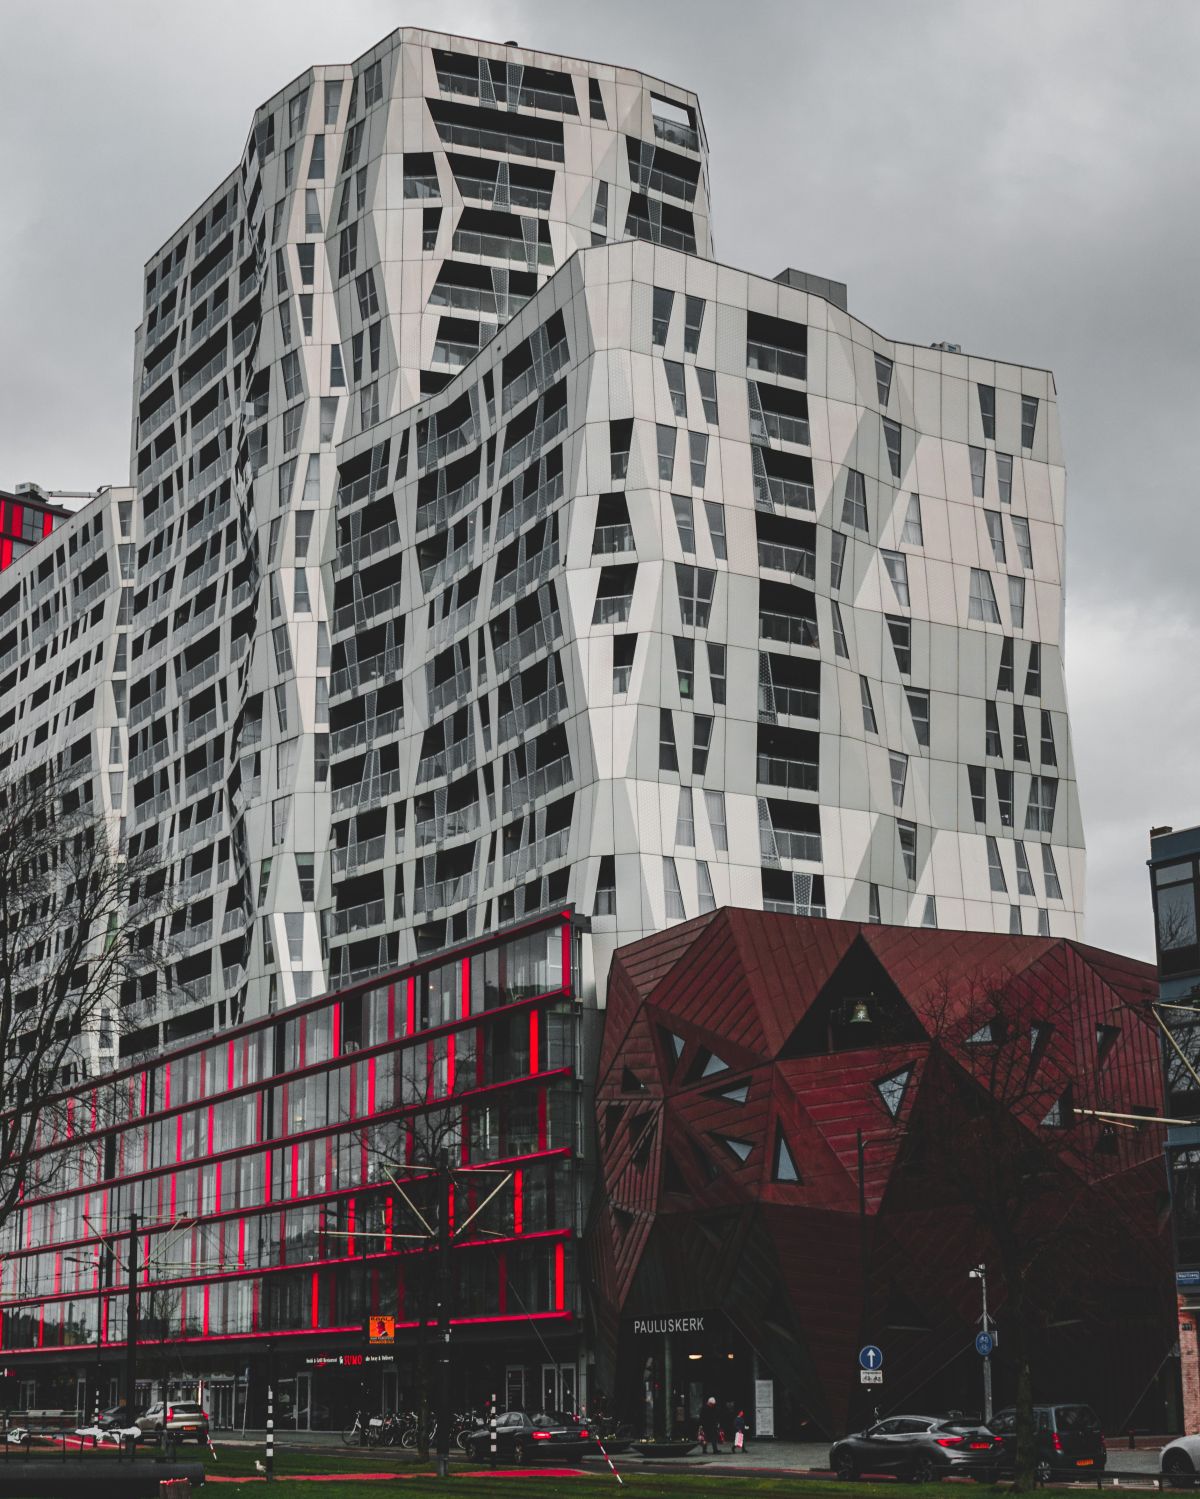 Immeuble de SCPI à Rotterdam, en Europe